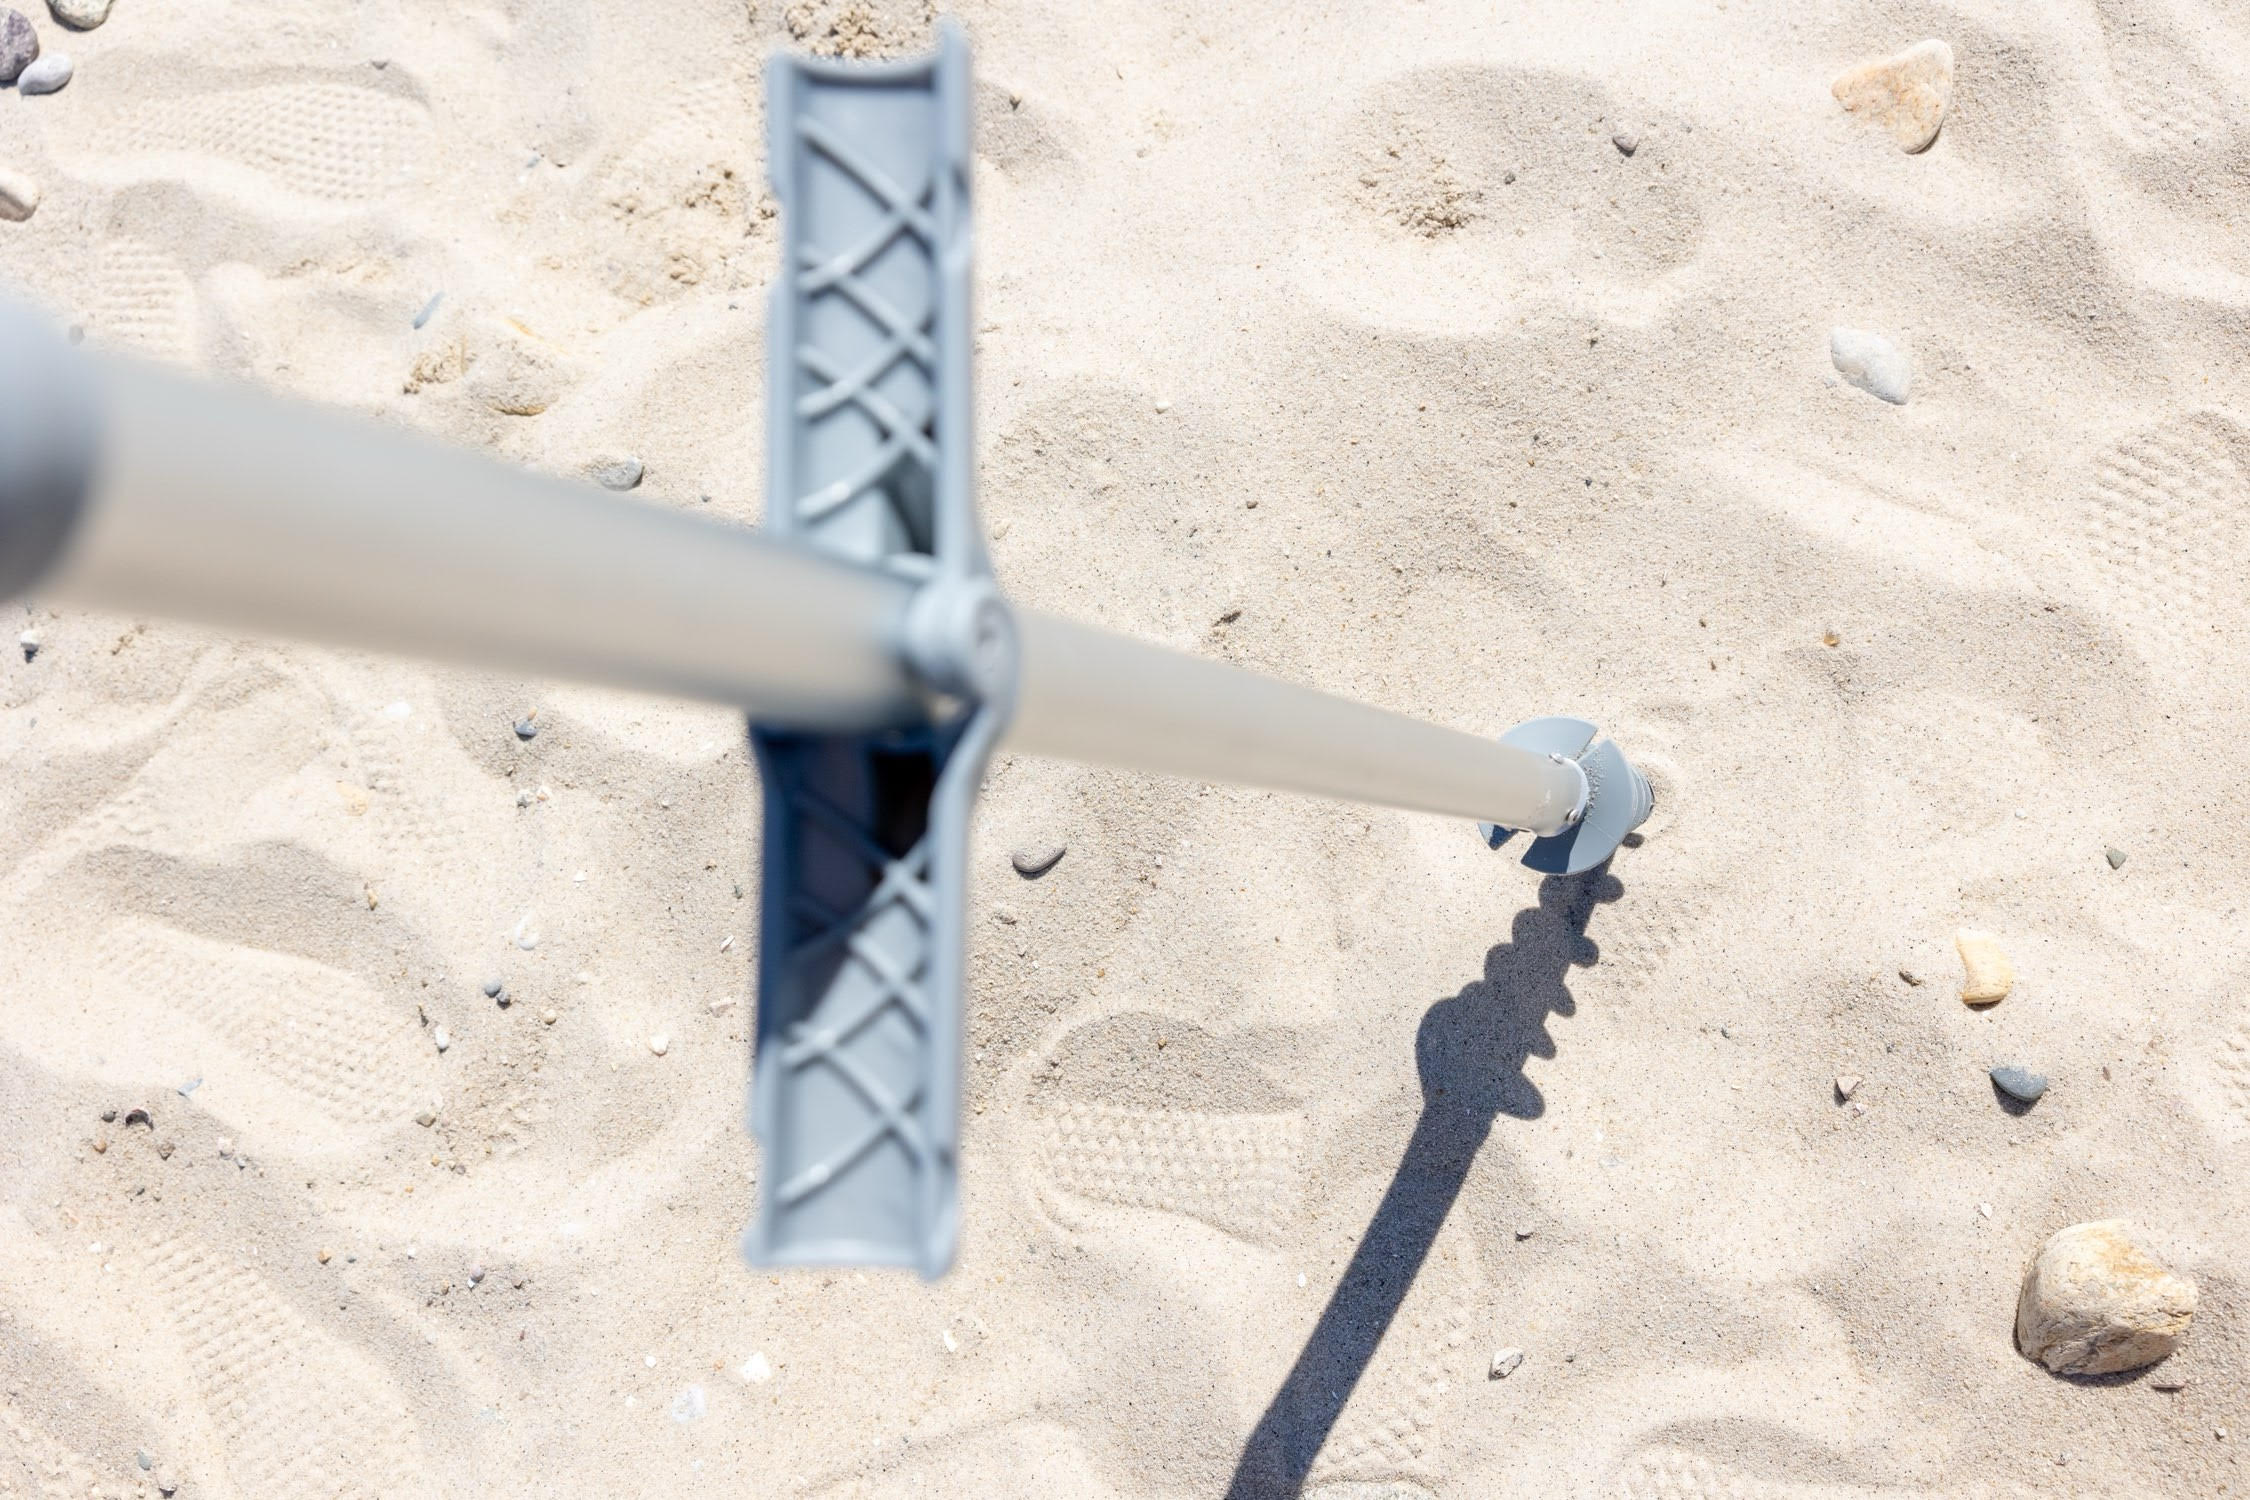 Beach Umbrella with Sand Anchor